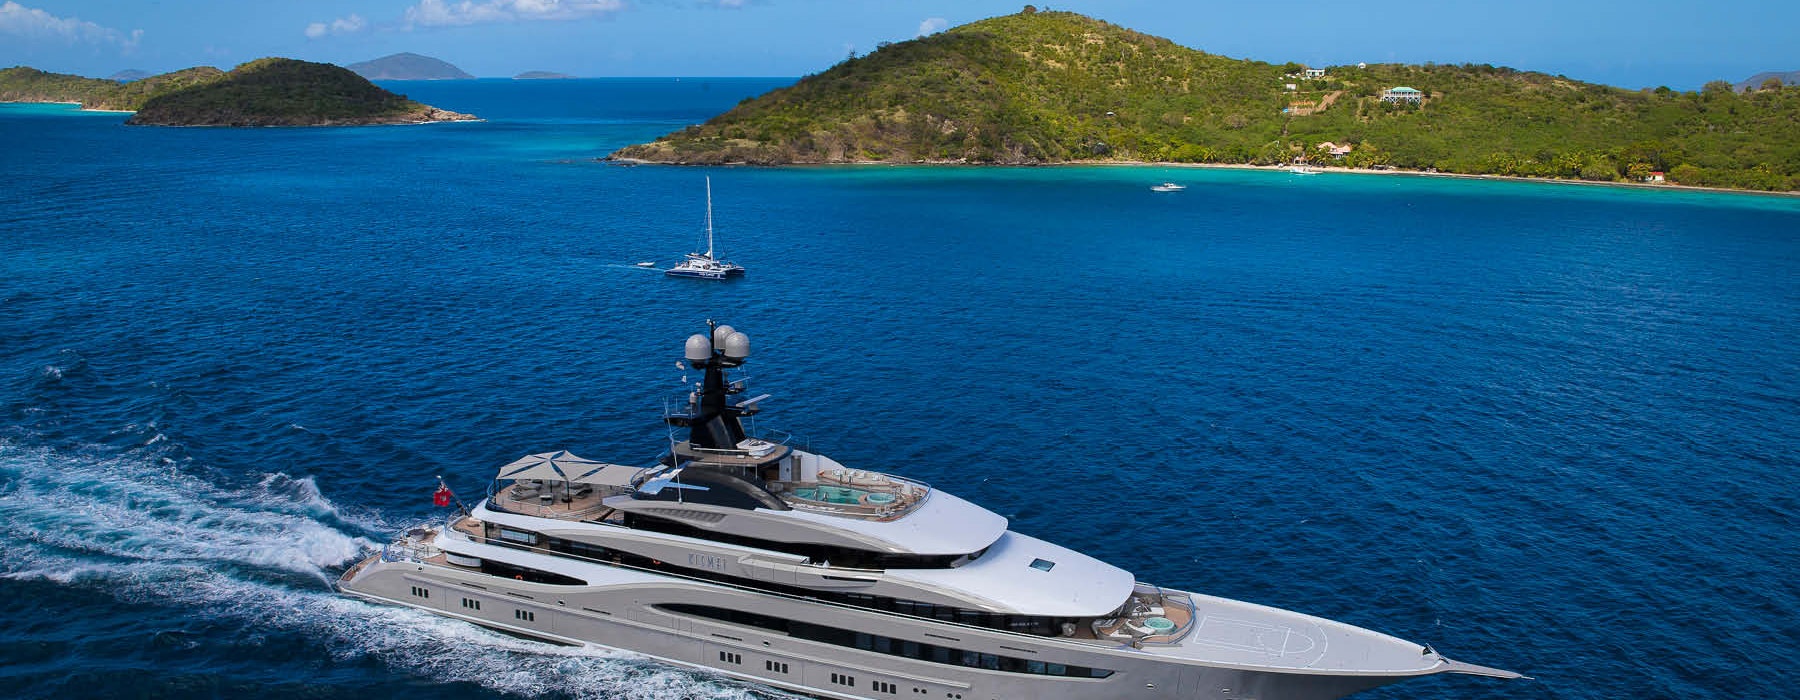 Kismet-luxury-yacht-caribbean charter